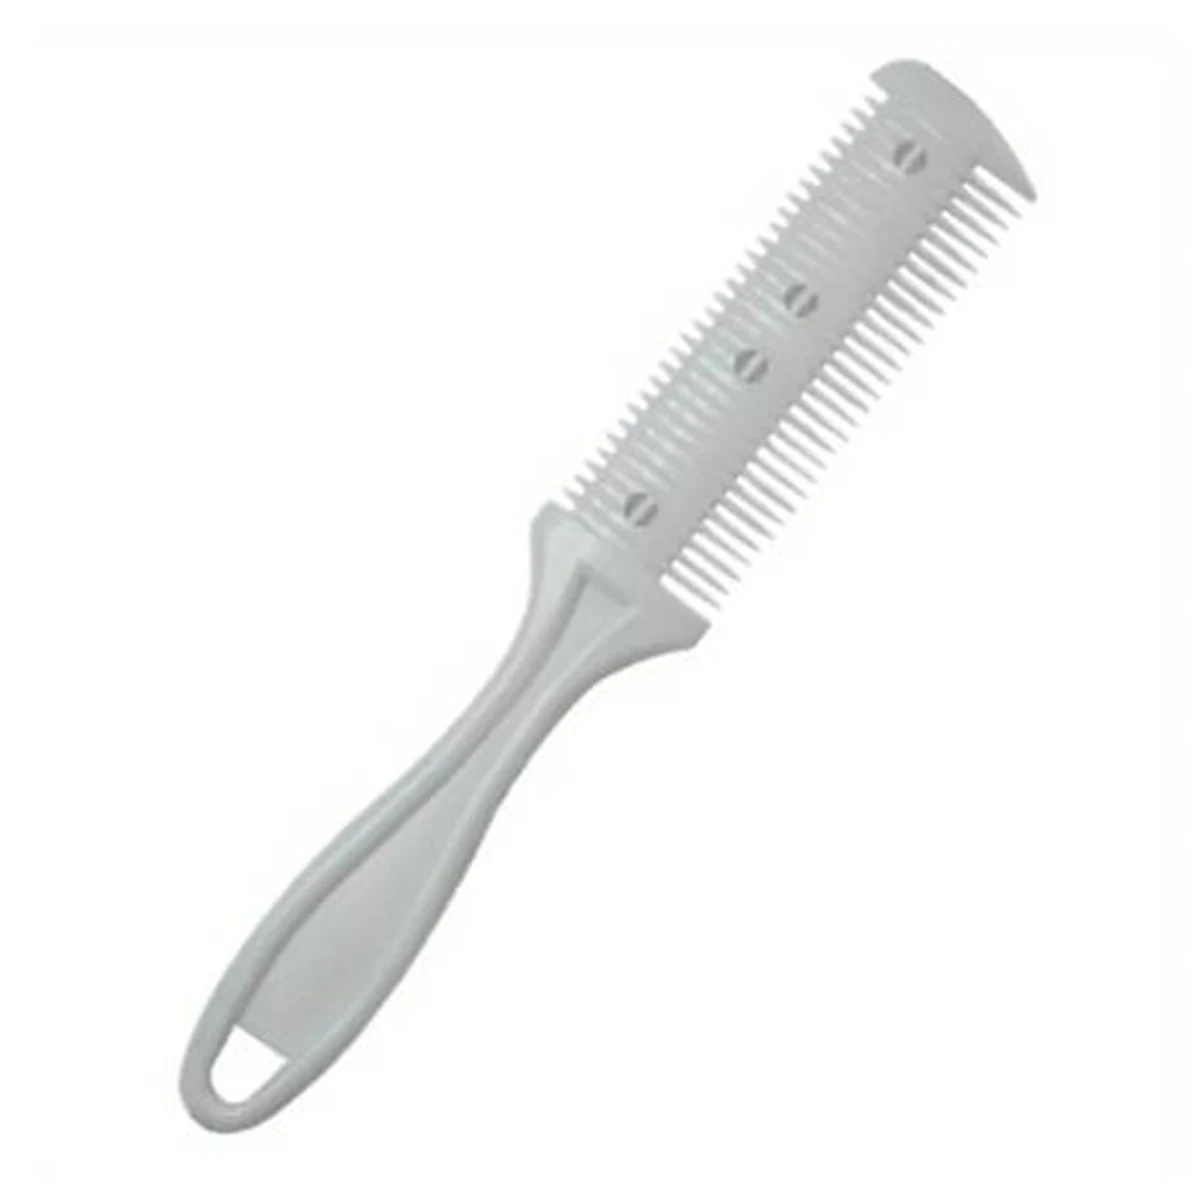 12pc חיתוך השיער מסרק שיער מברשות עם סכיני גילוח שיער גוזם חותך לדילול כלי מספרה כלי שיער סלון - 5